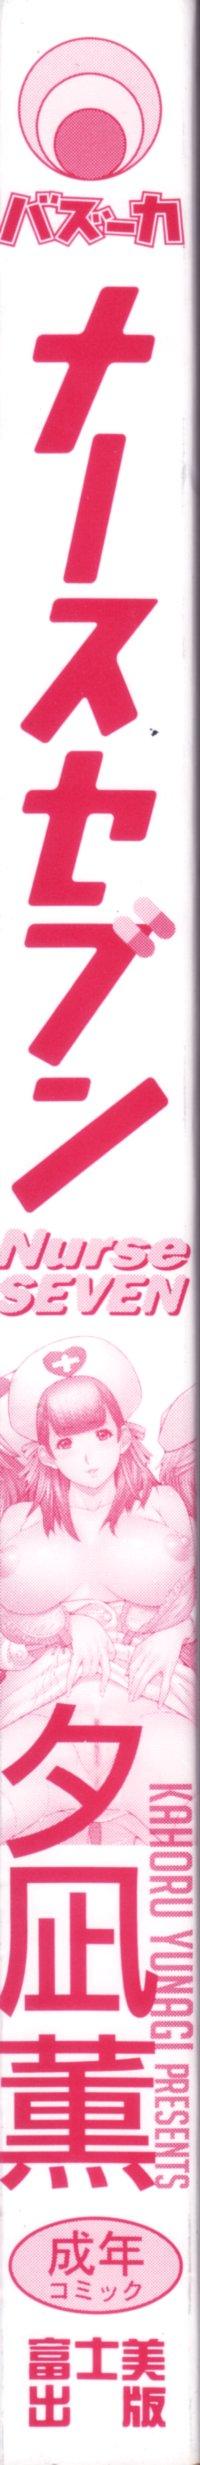 Hardcore Nurse Seven Fun - Page 6